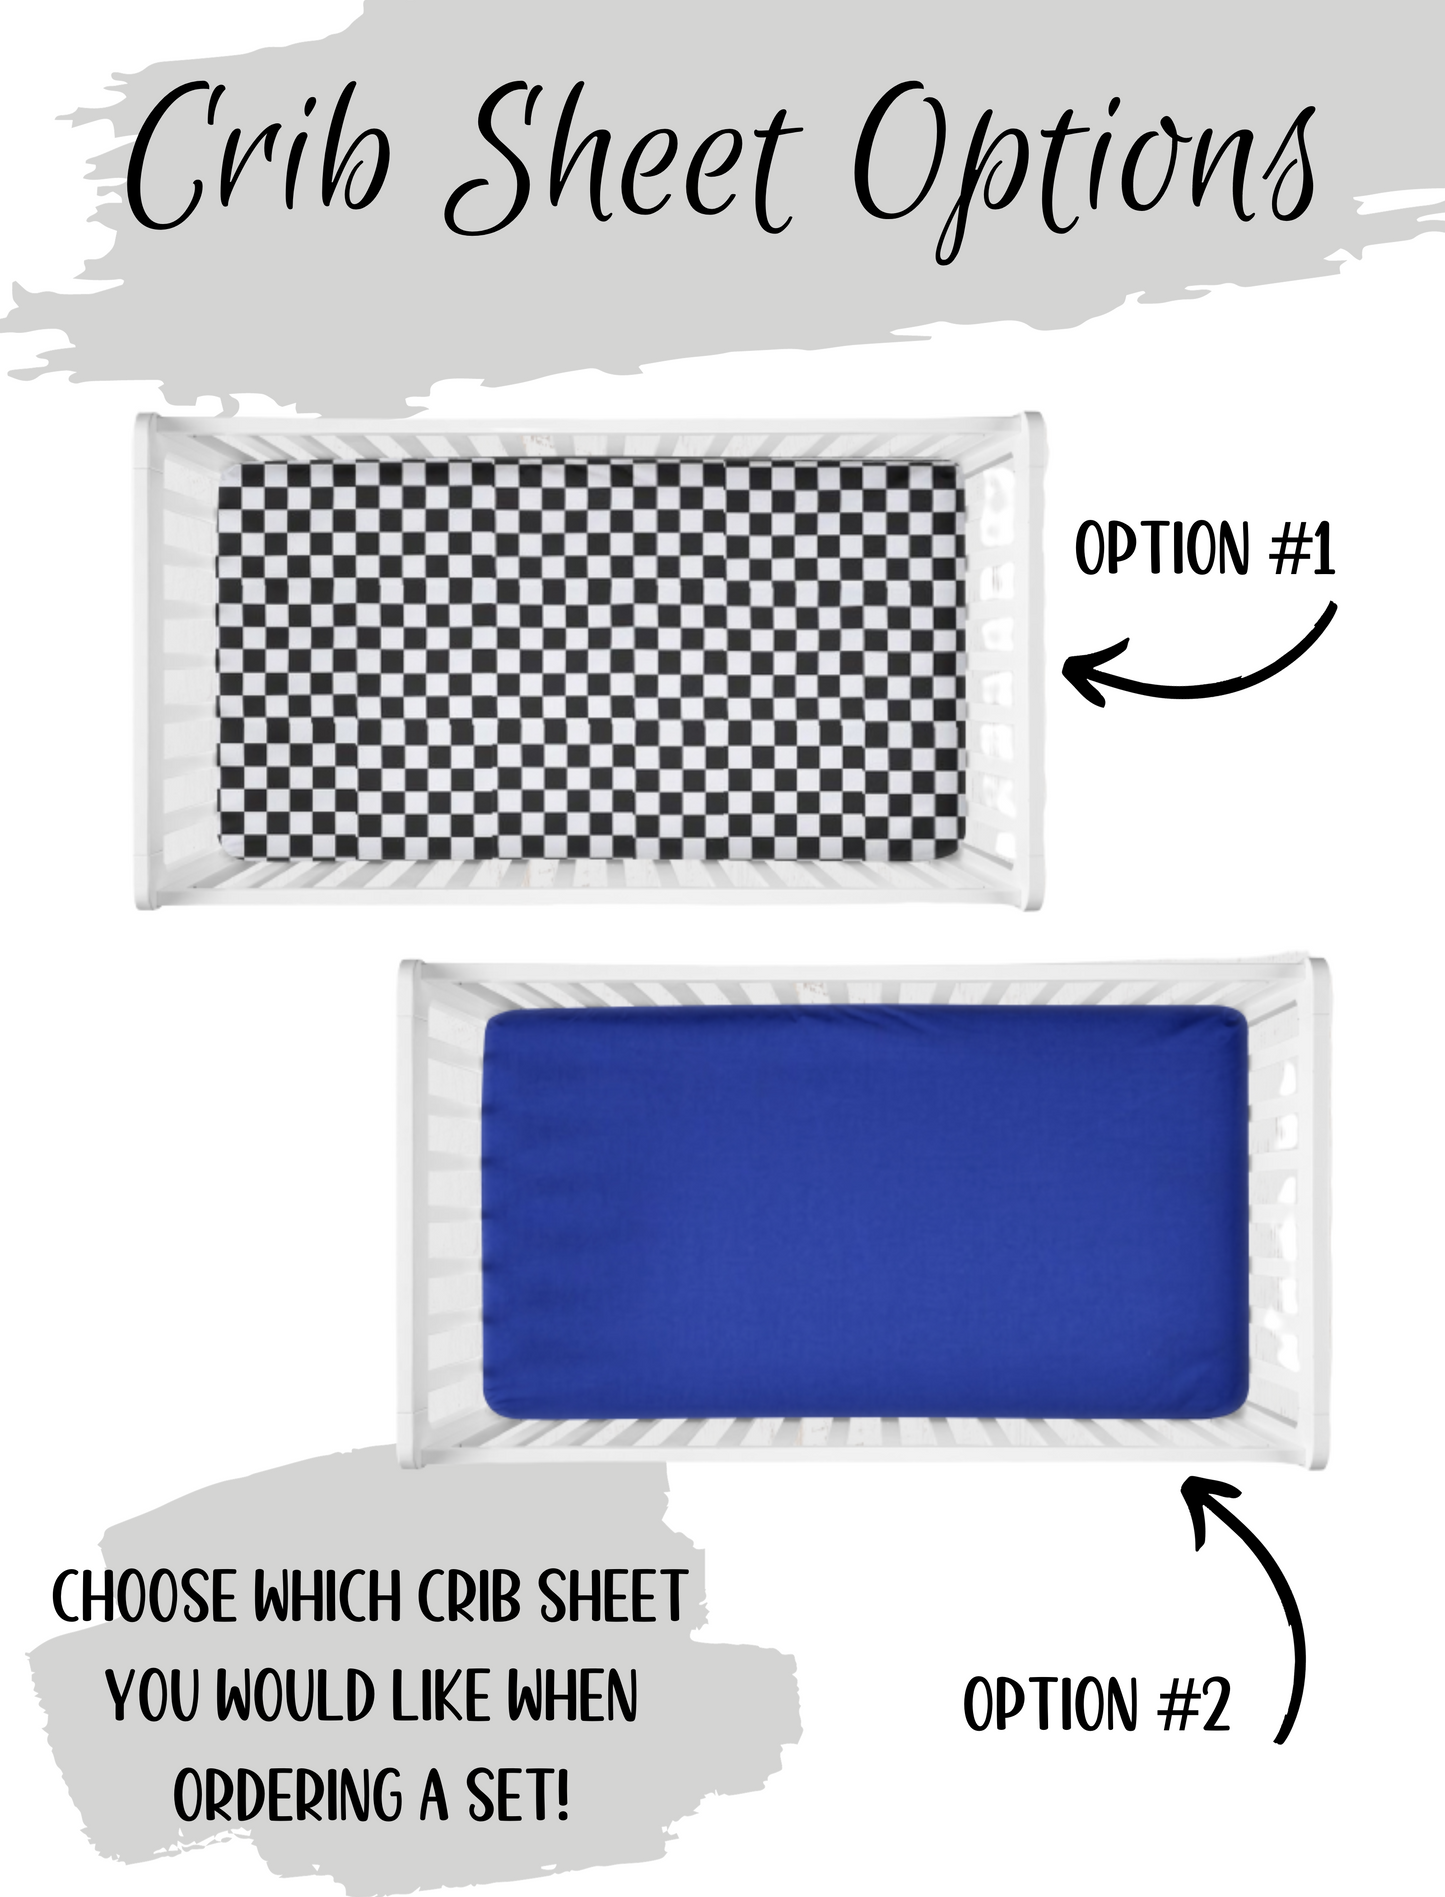 pick your crib sheet - blue crib sheet or racing check crib sheet